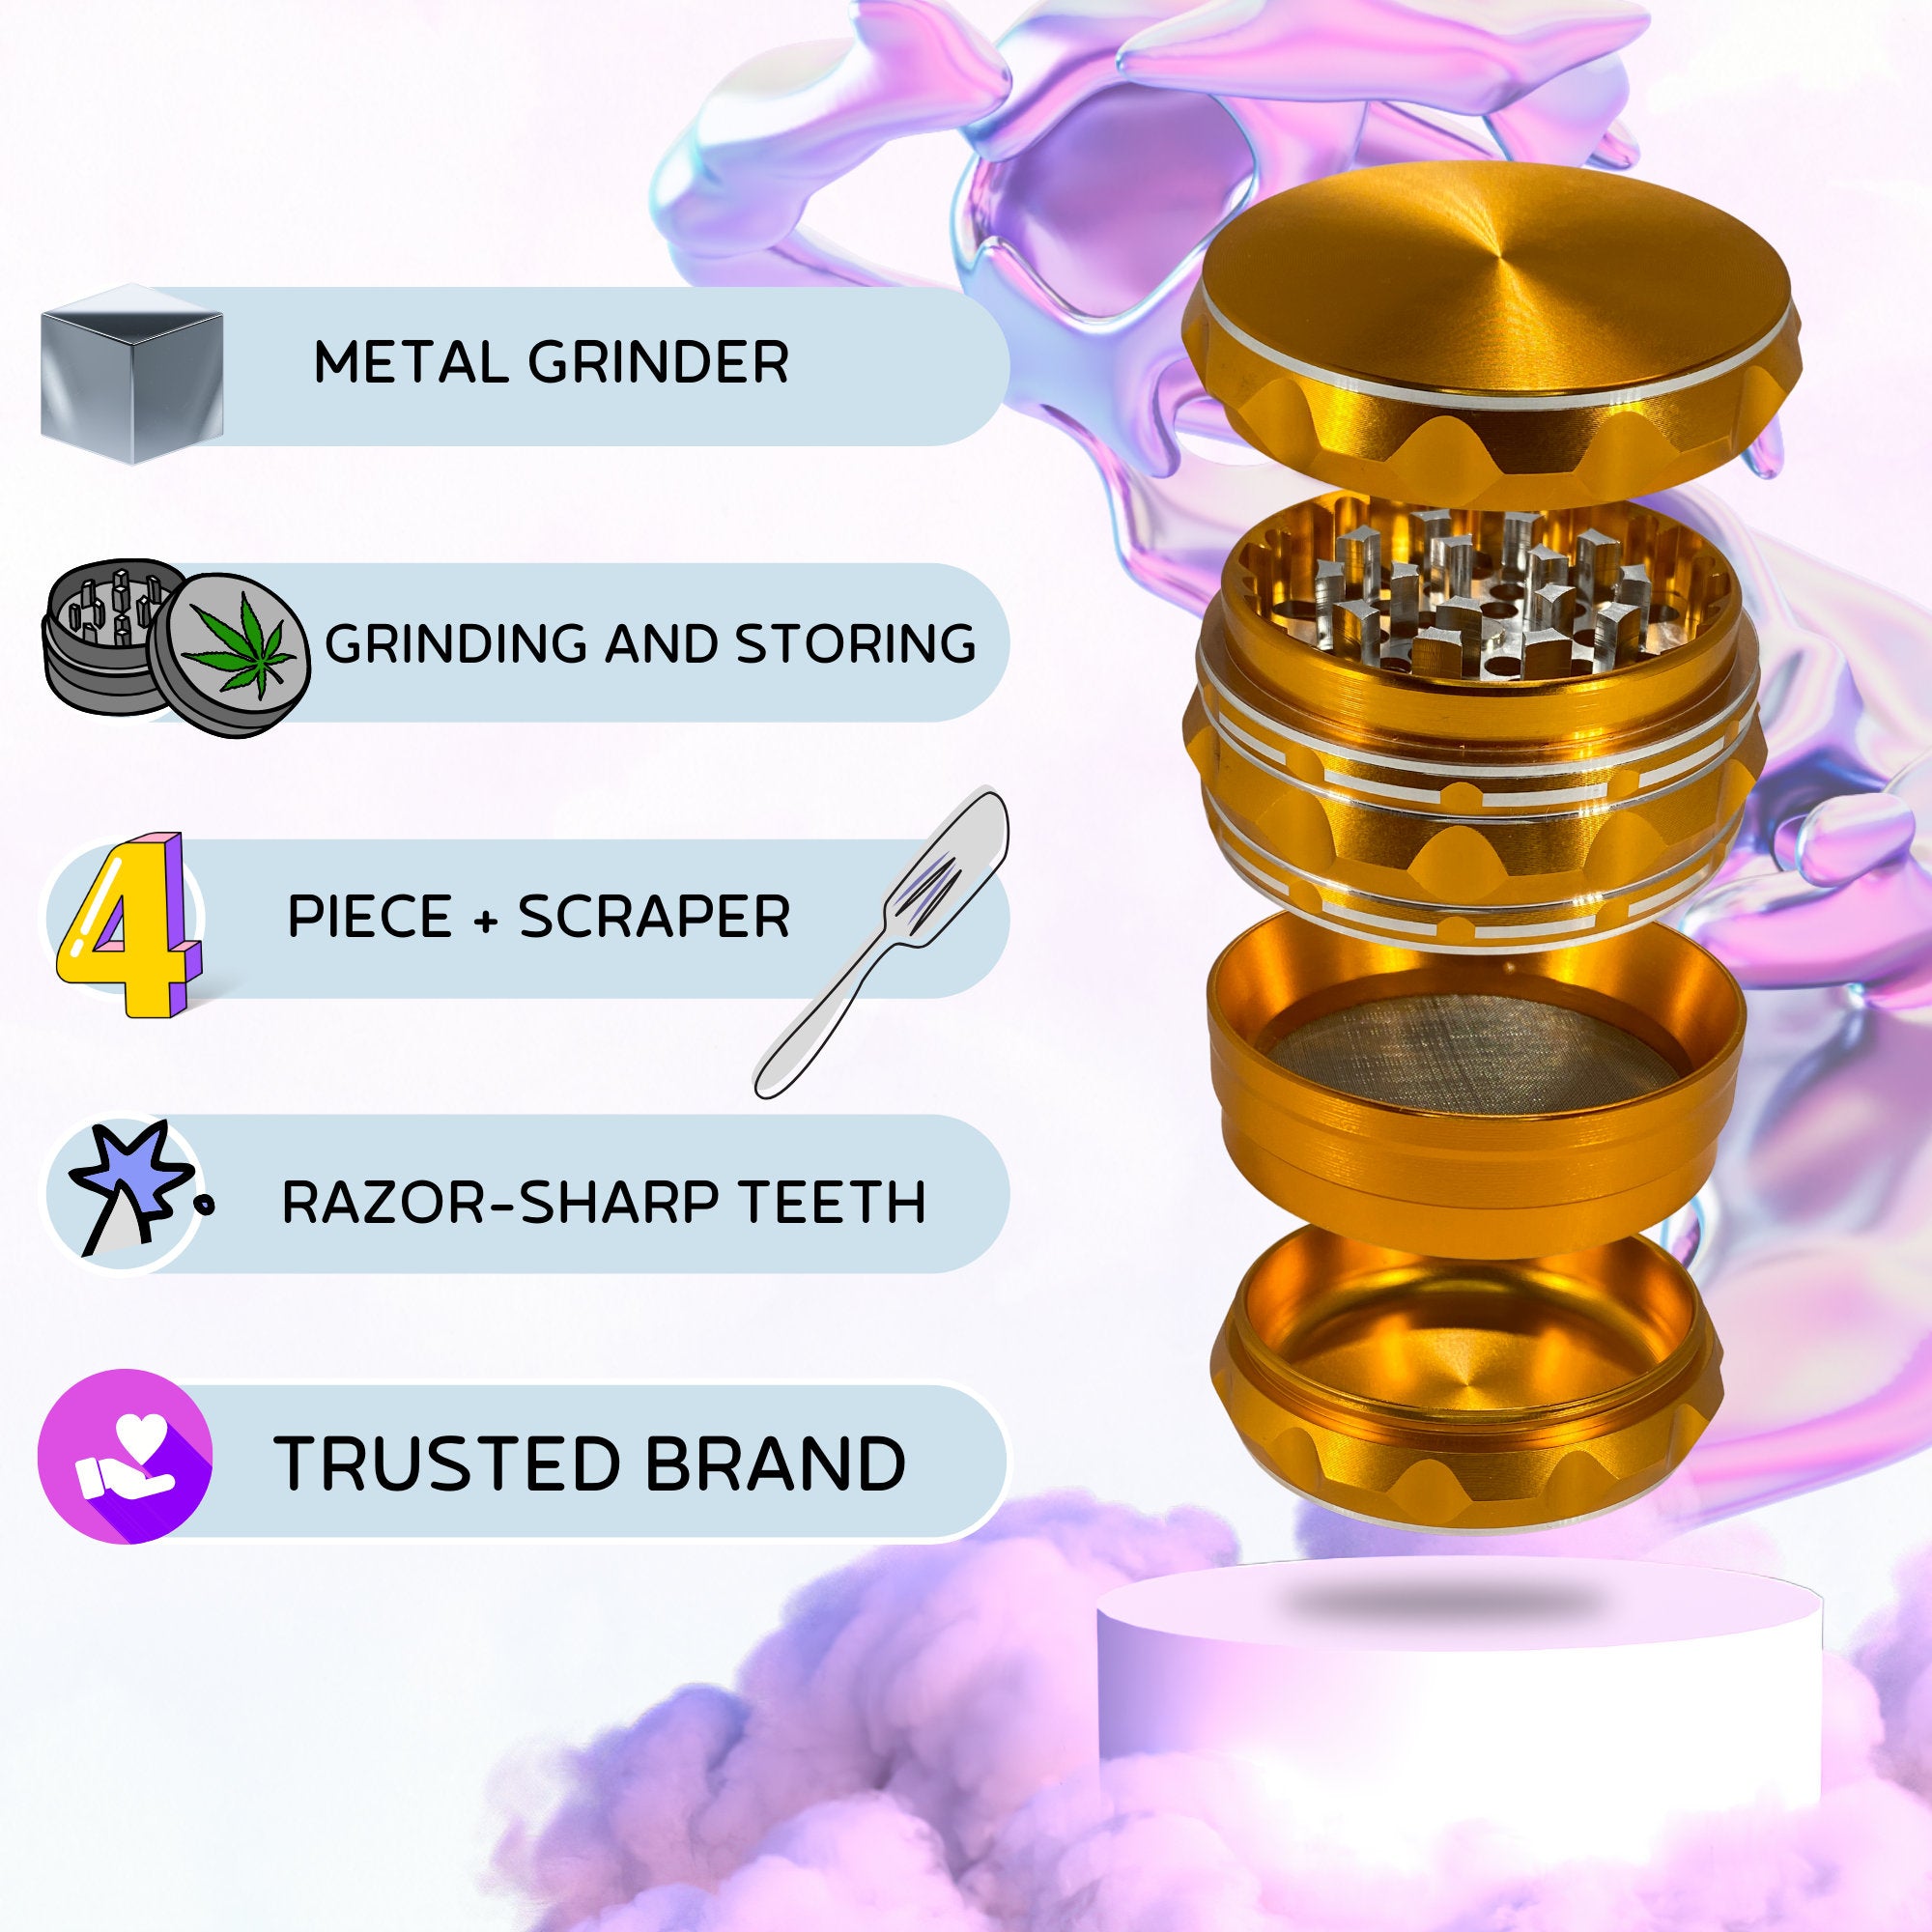 Premium Weed Grinder | Gold grinder, cannabis grinders, Best friend gift, Big Herb grinder, Strong grinder, 4 pieces grinders, stoner gift